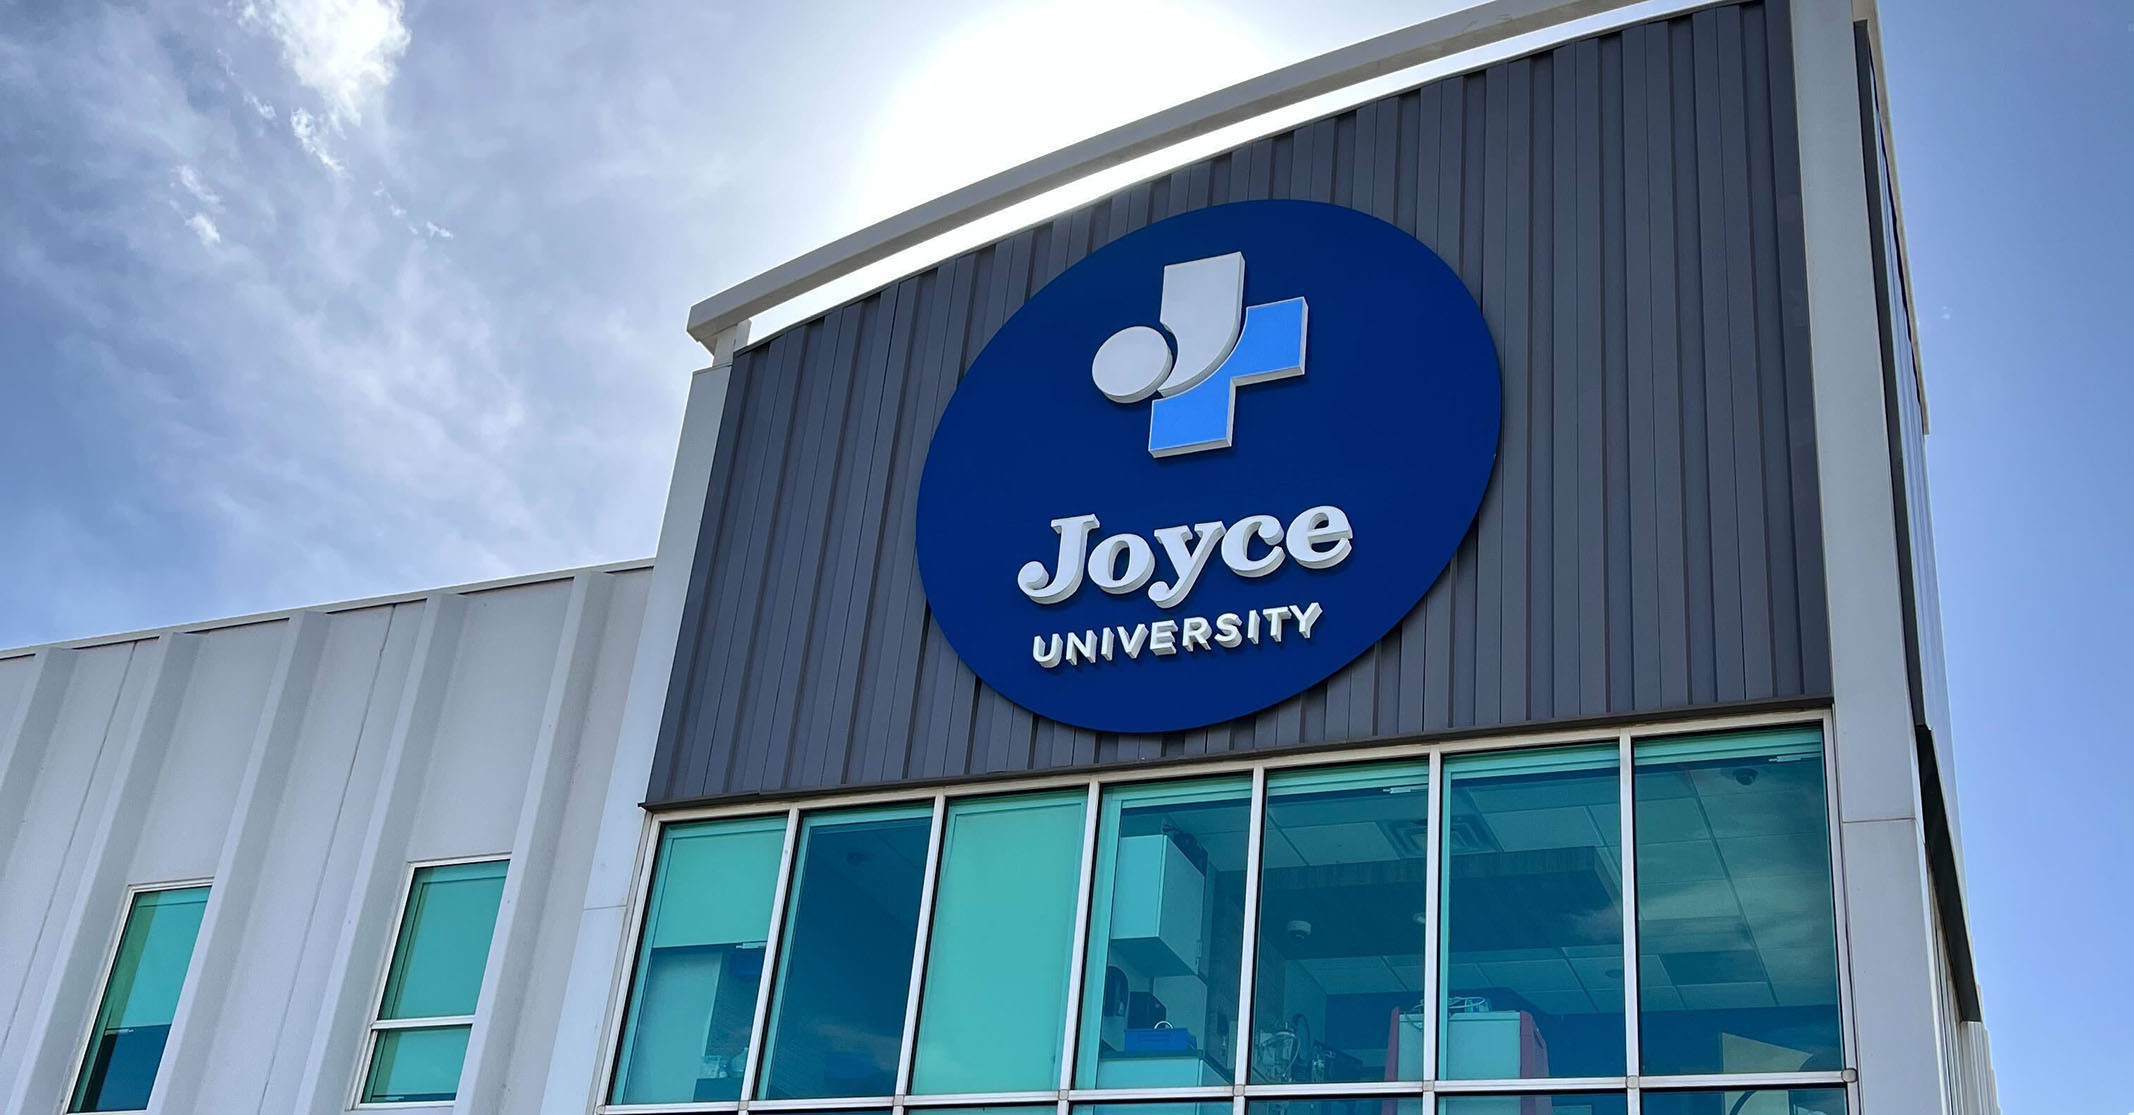 joyce university campus